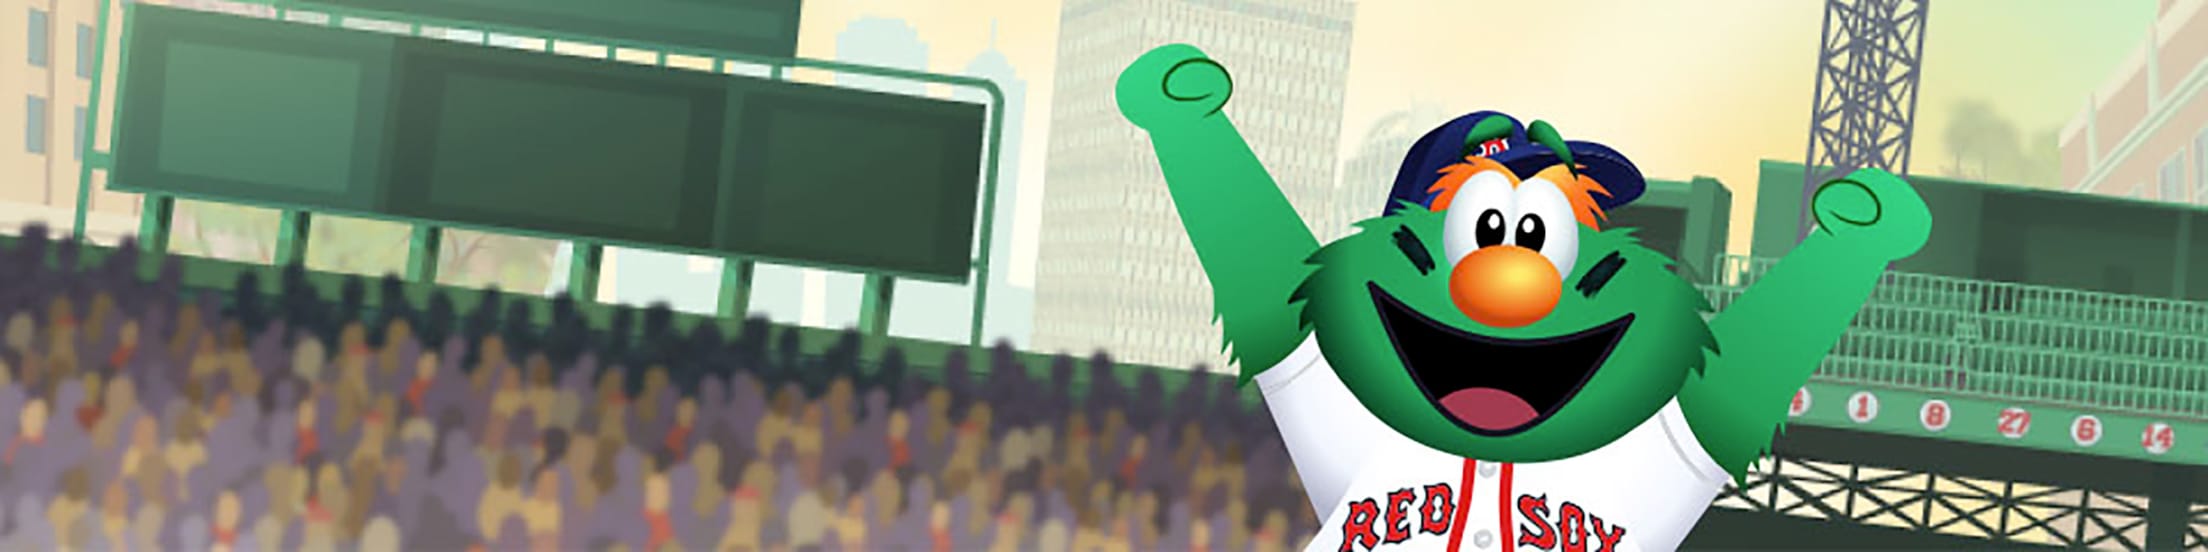 Tessie - Red Sox mascot